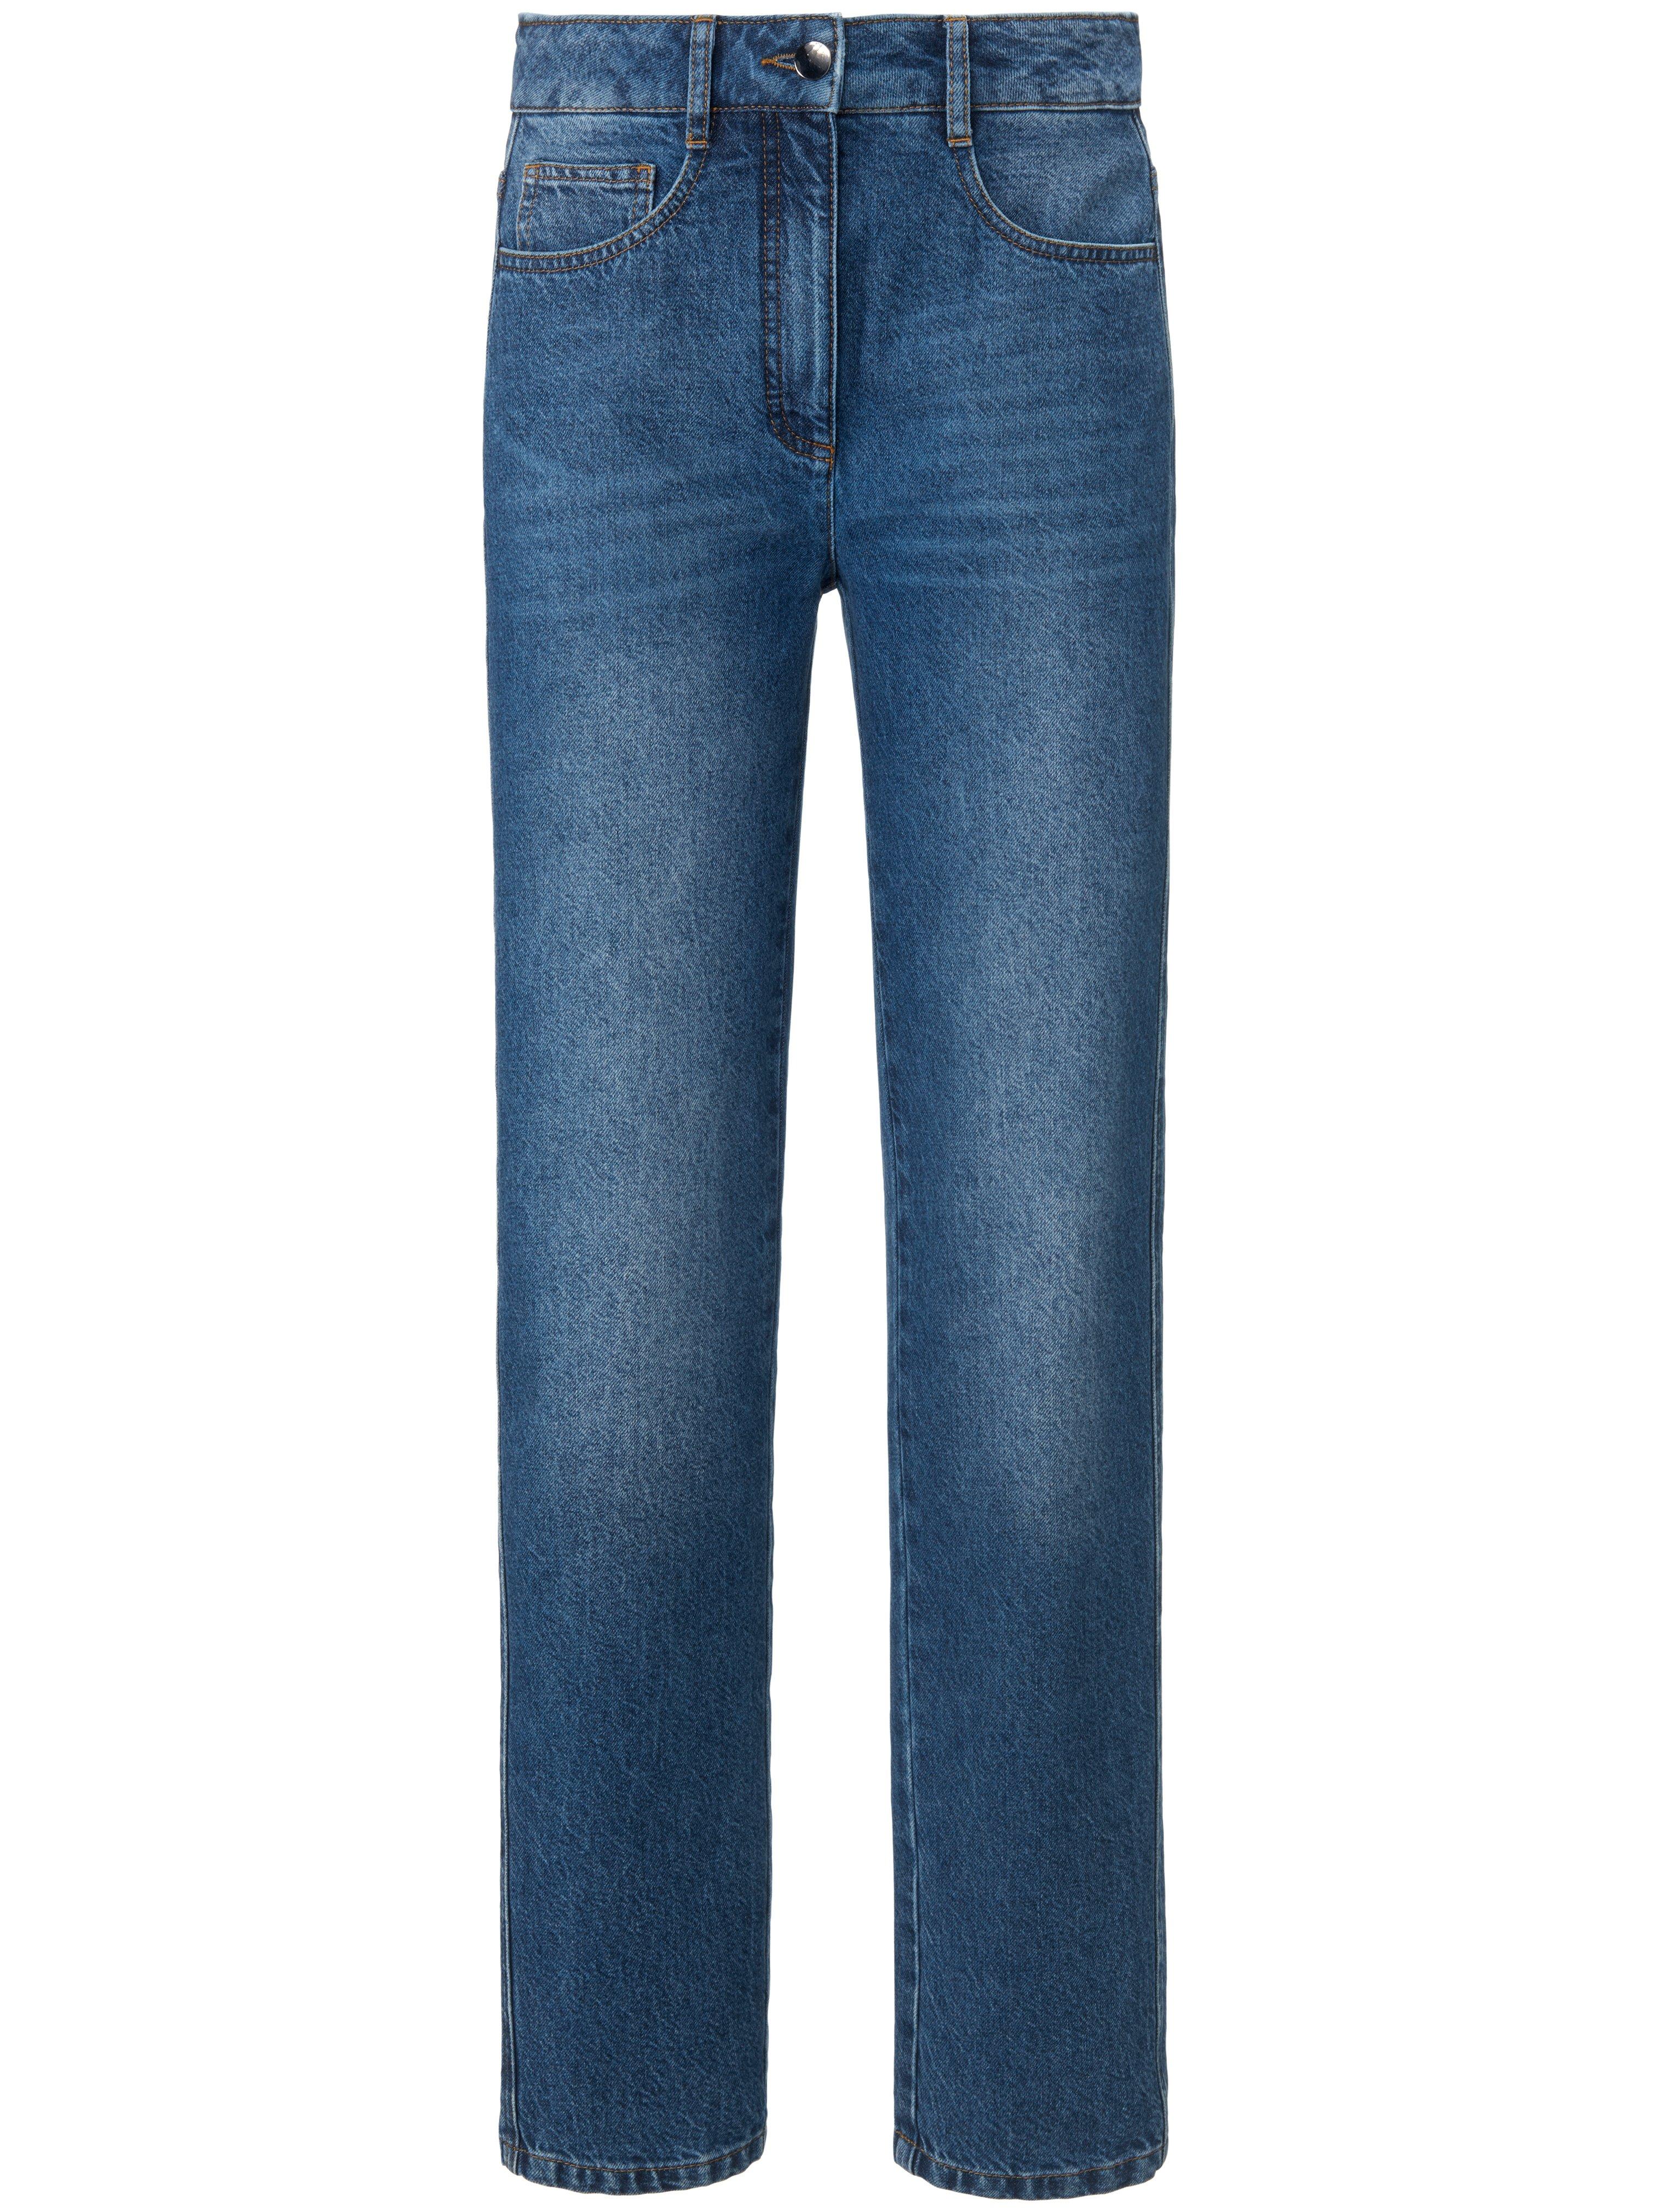 Jeans 100% katoen in 5-pocketsmodel Van MYBC denim